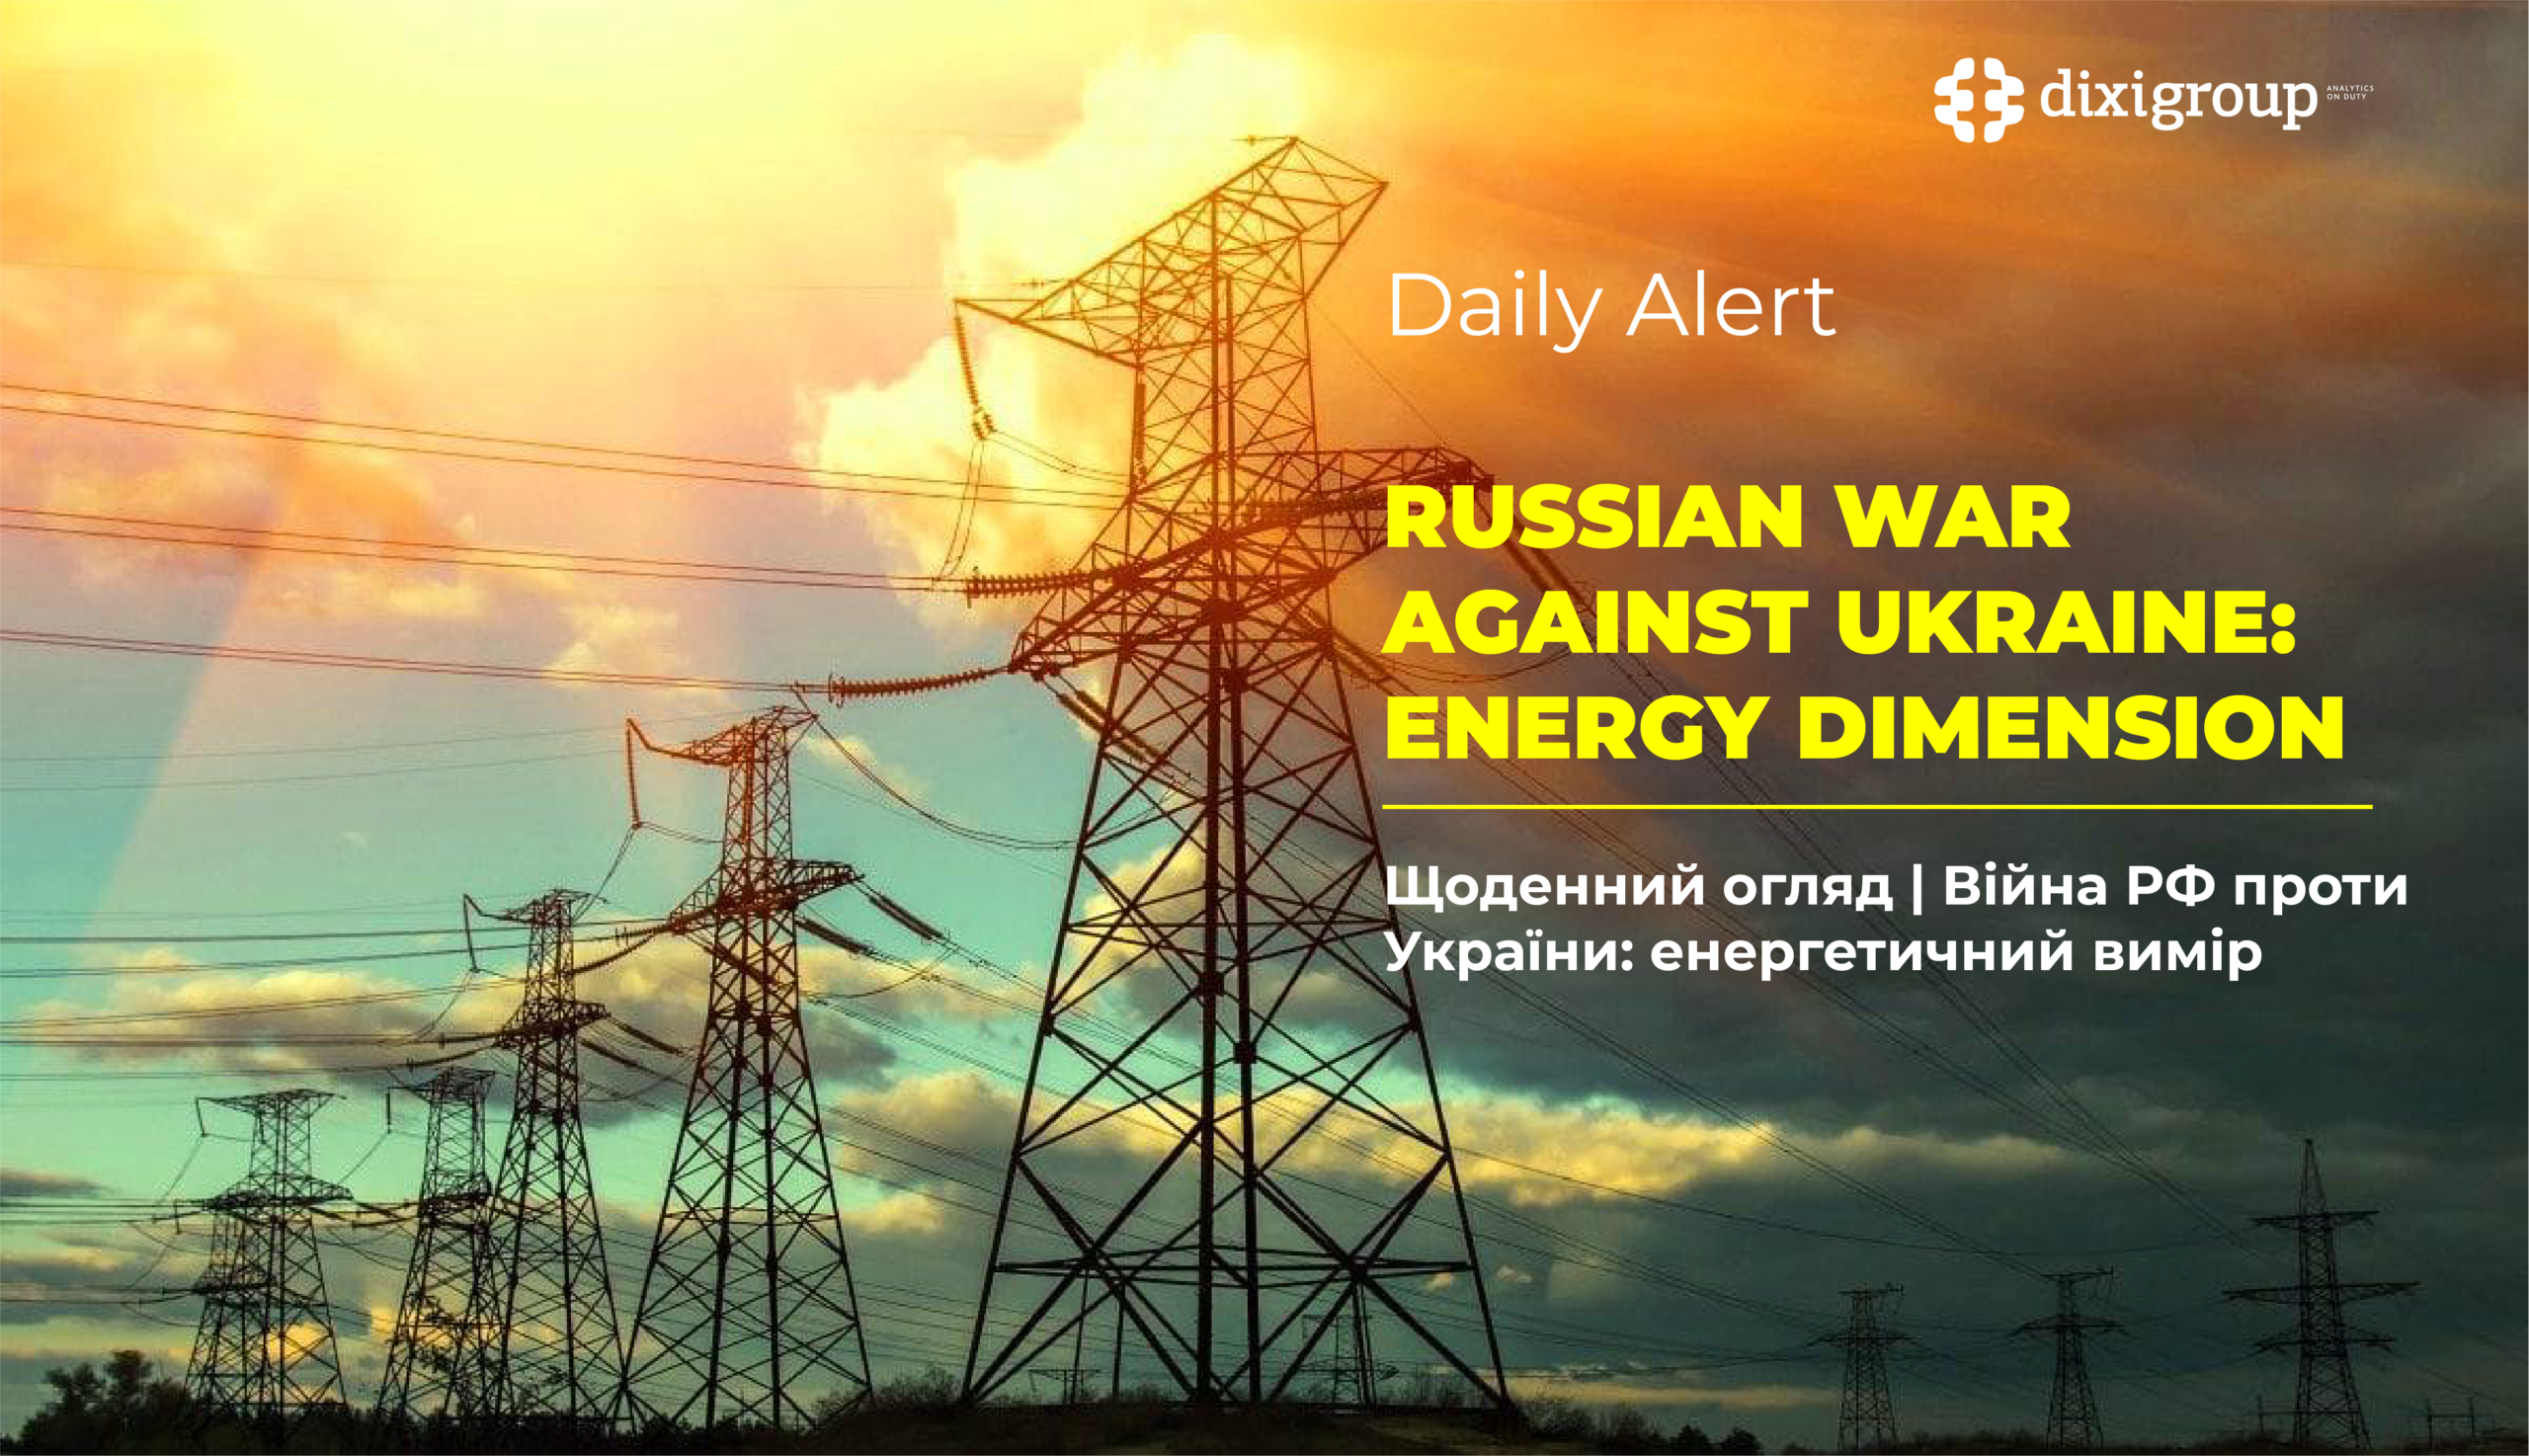 Russian War Against Ukraine: Energy Dimension (DiXi Group alert) – February 20